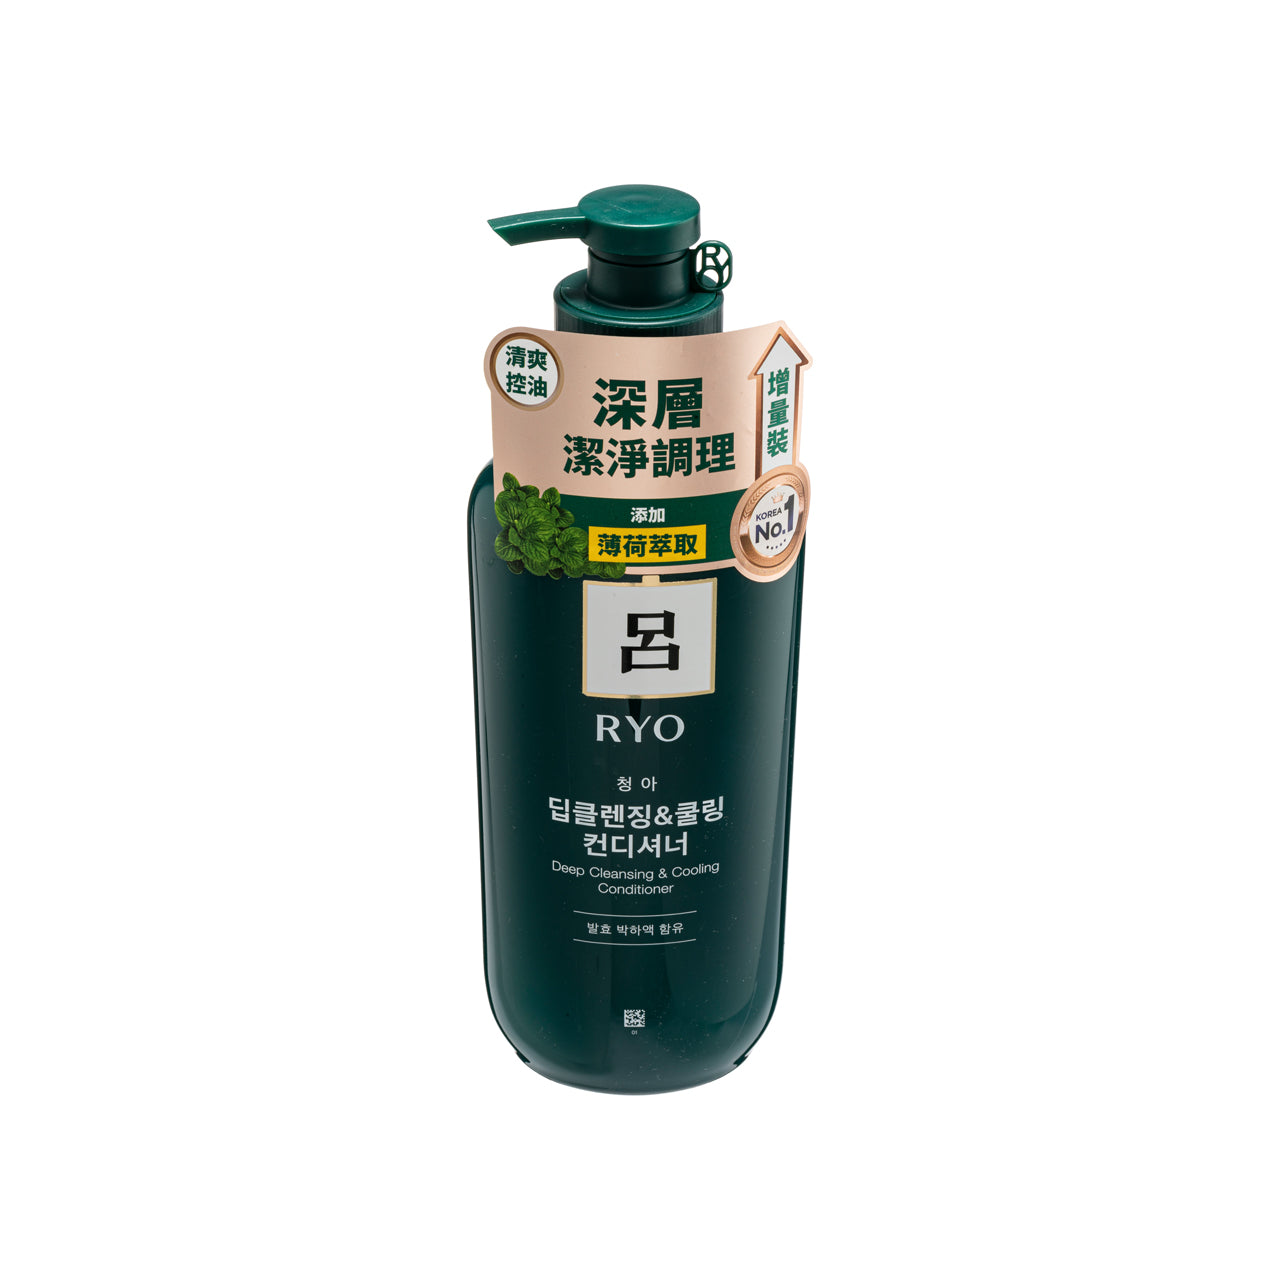 Ryo Deep Cleansing & Cooling Conditioner 550ML | Sasa Global eShop